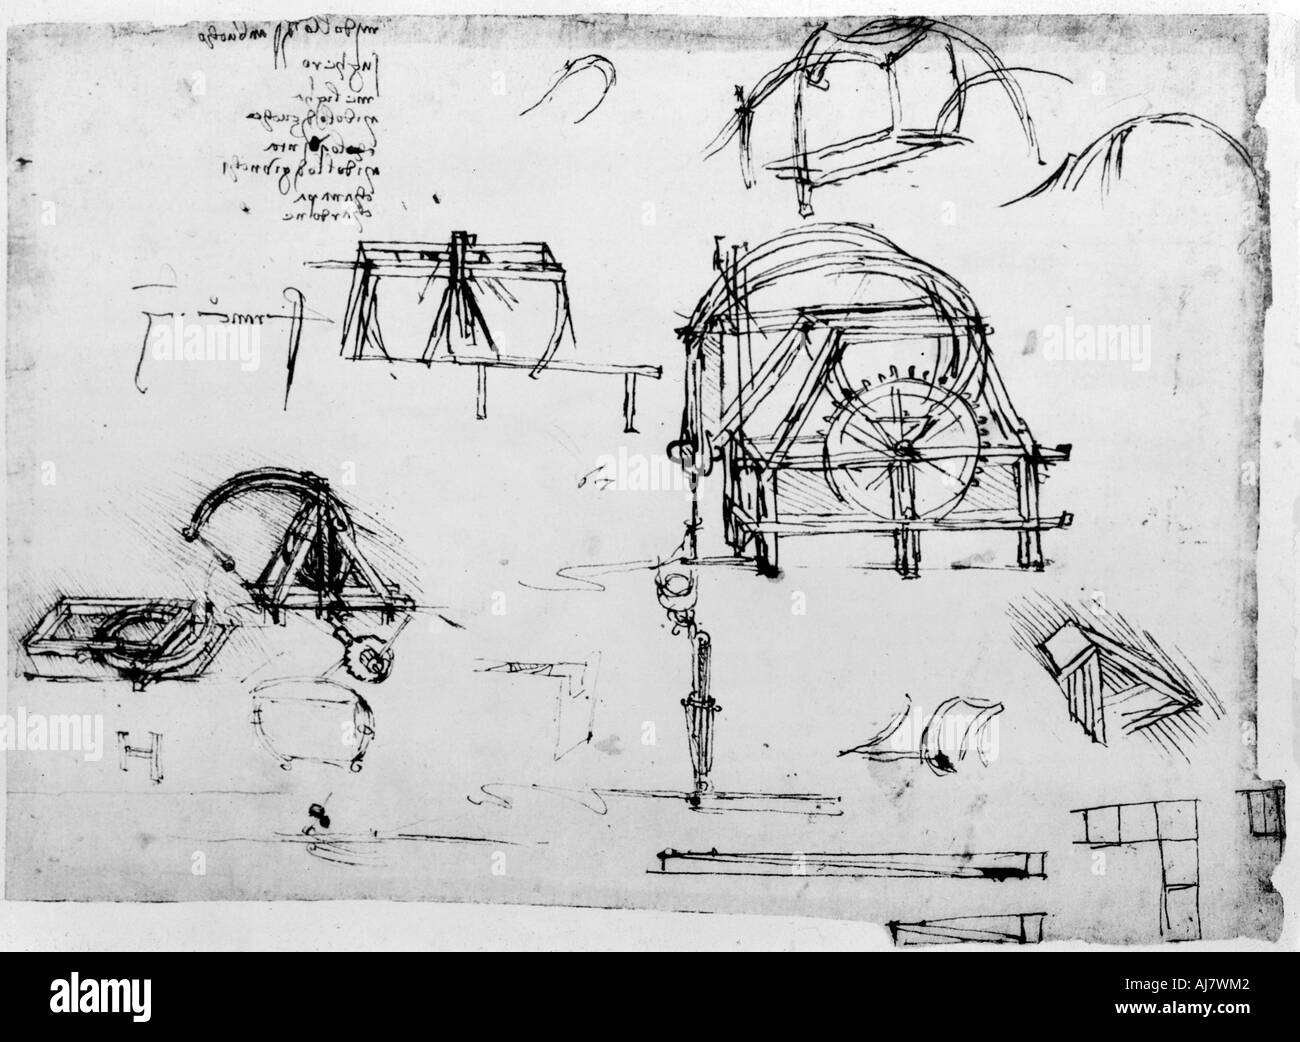 Sketch of a perpetual motion device designed by Leonardo da Vinci, c1472-1519. Artist: Leonardo da Vinci Stock Photo